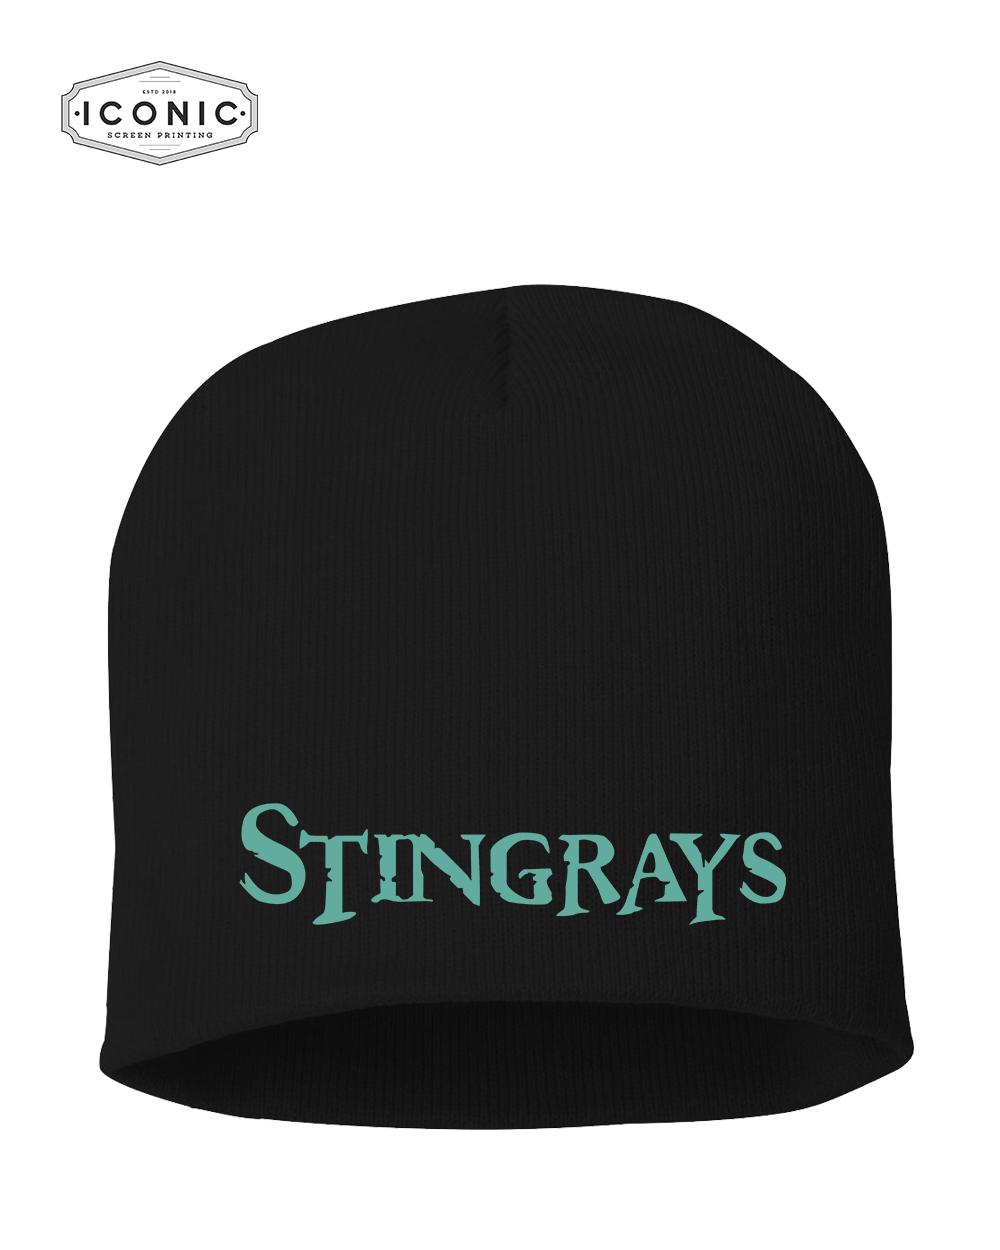 Stingrays - 8